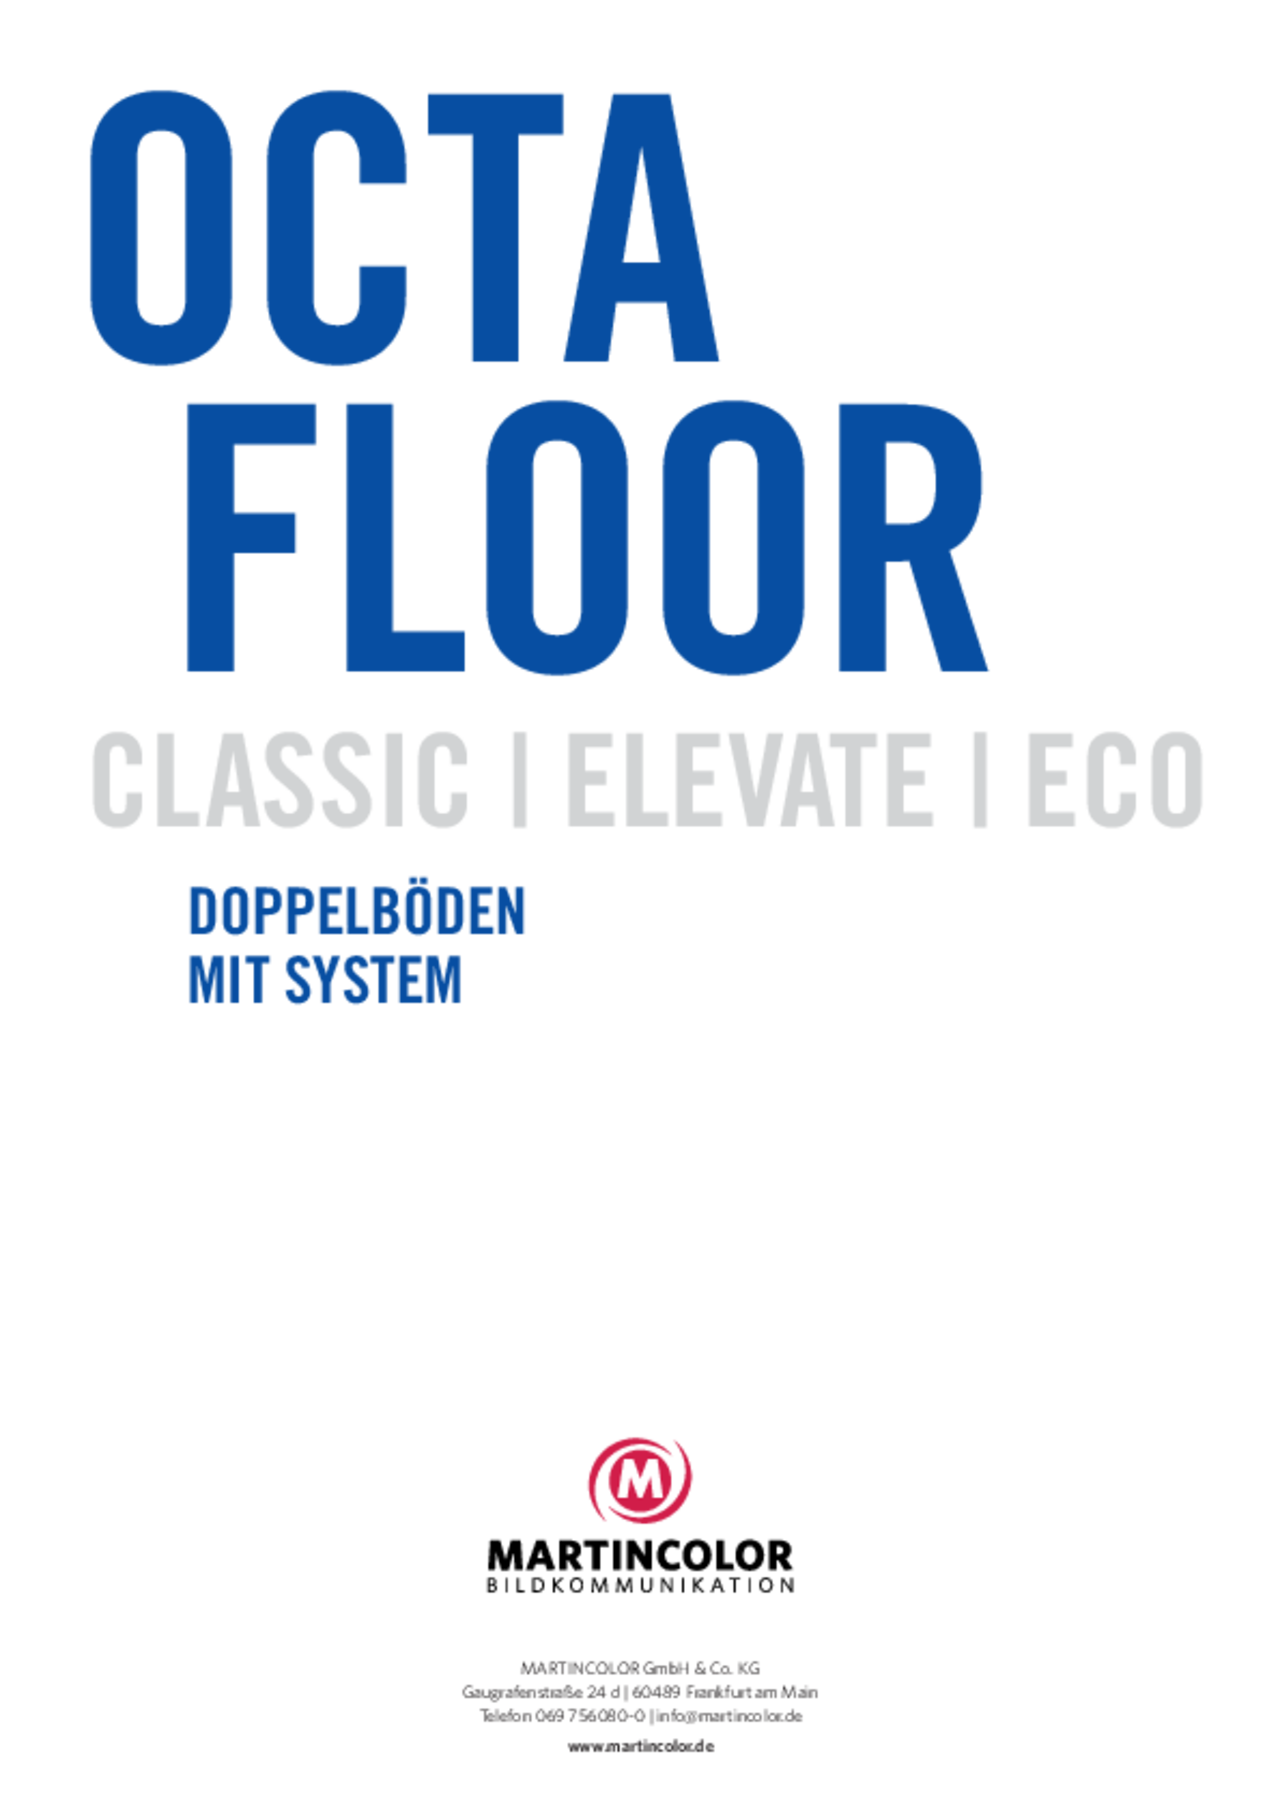 OCTAclassic floor Prospekt PDF